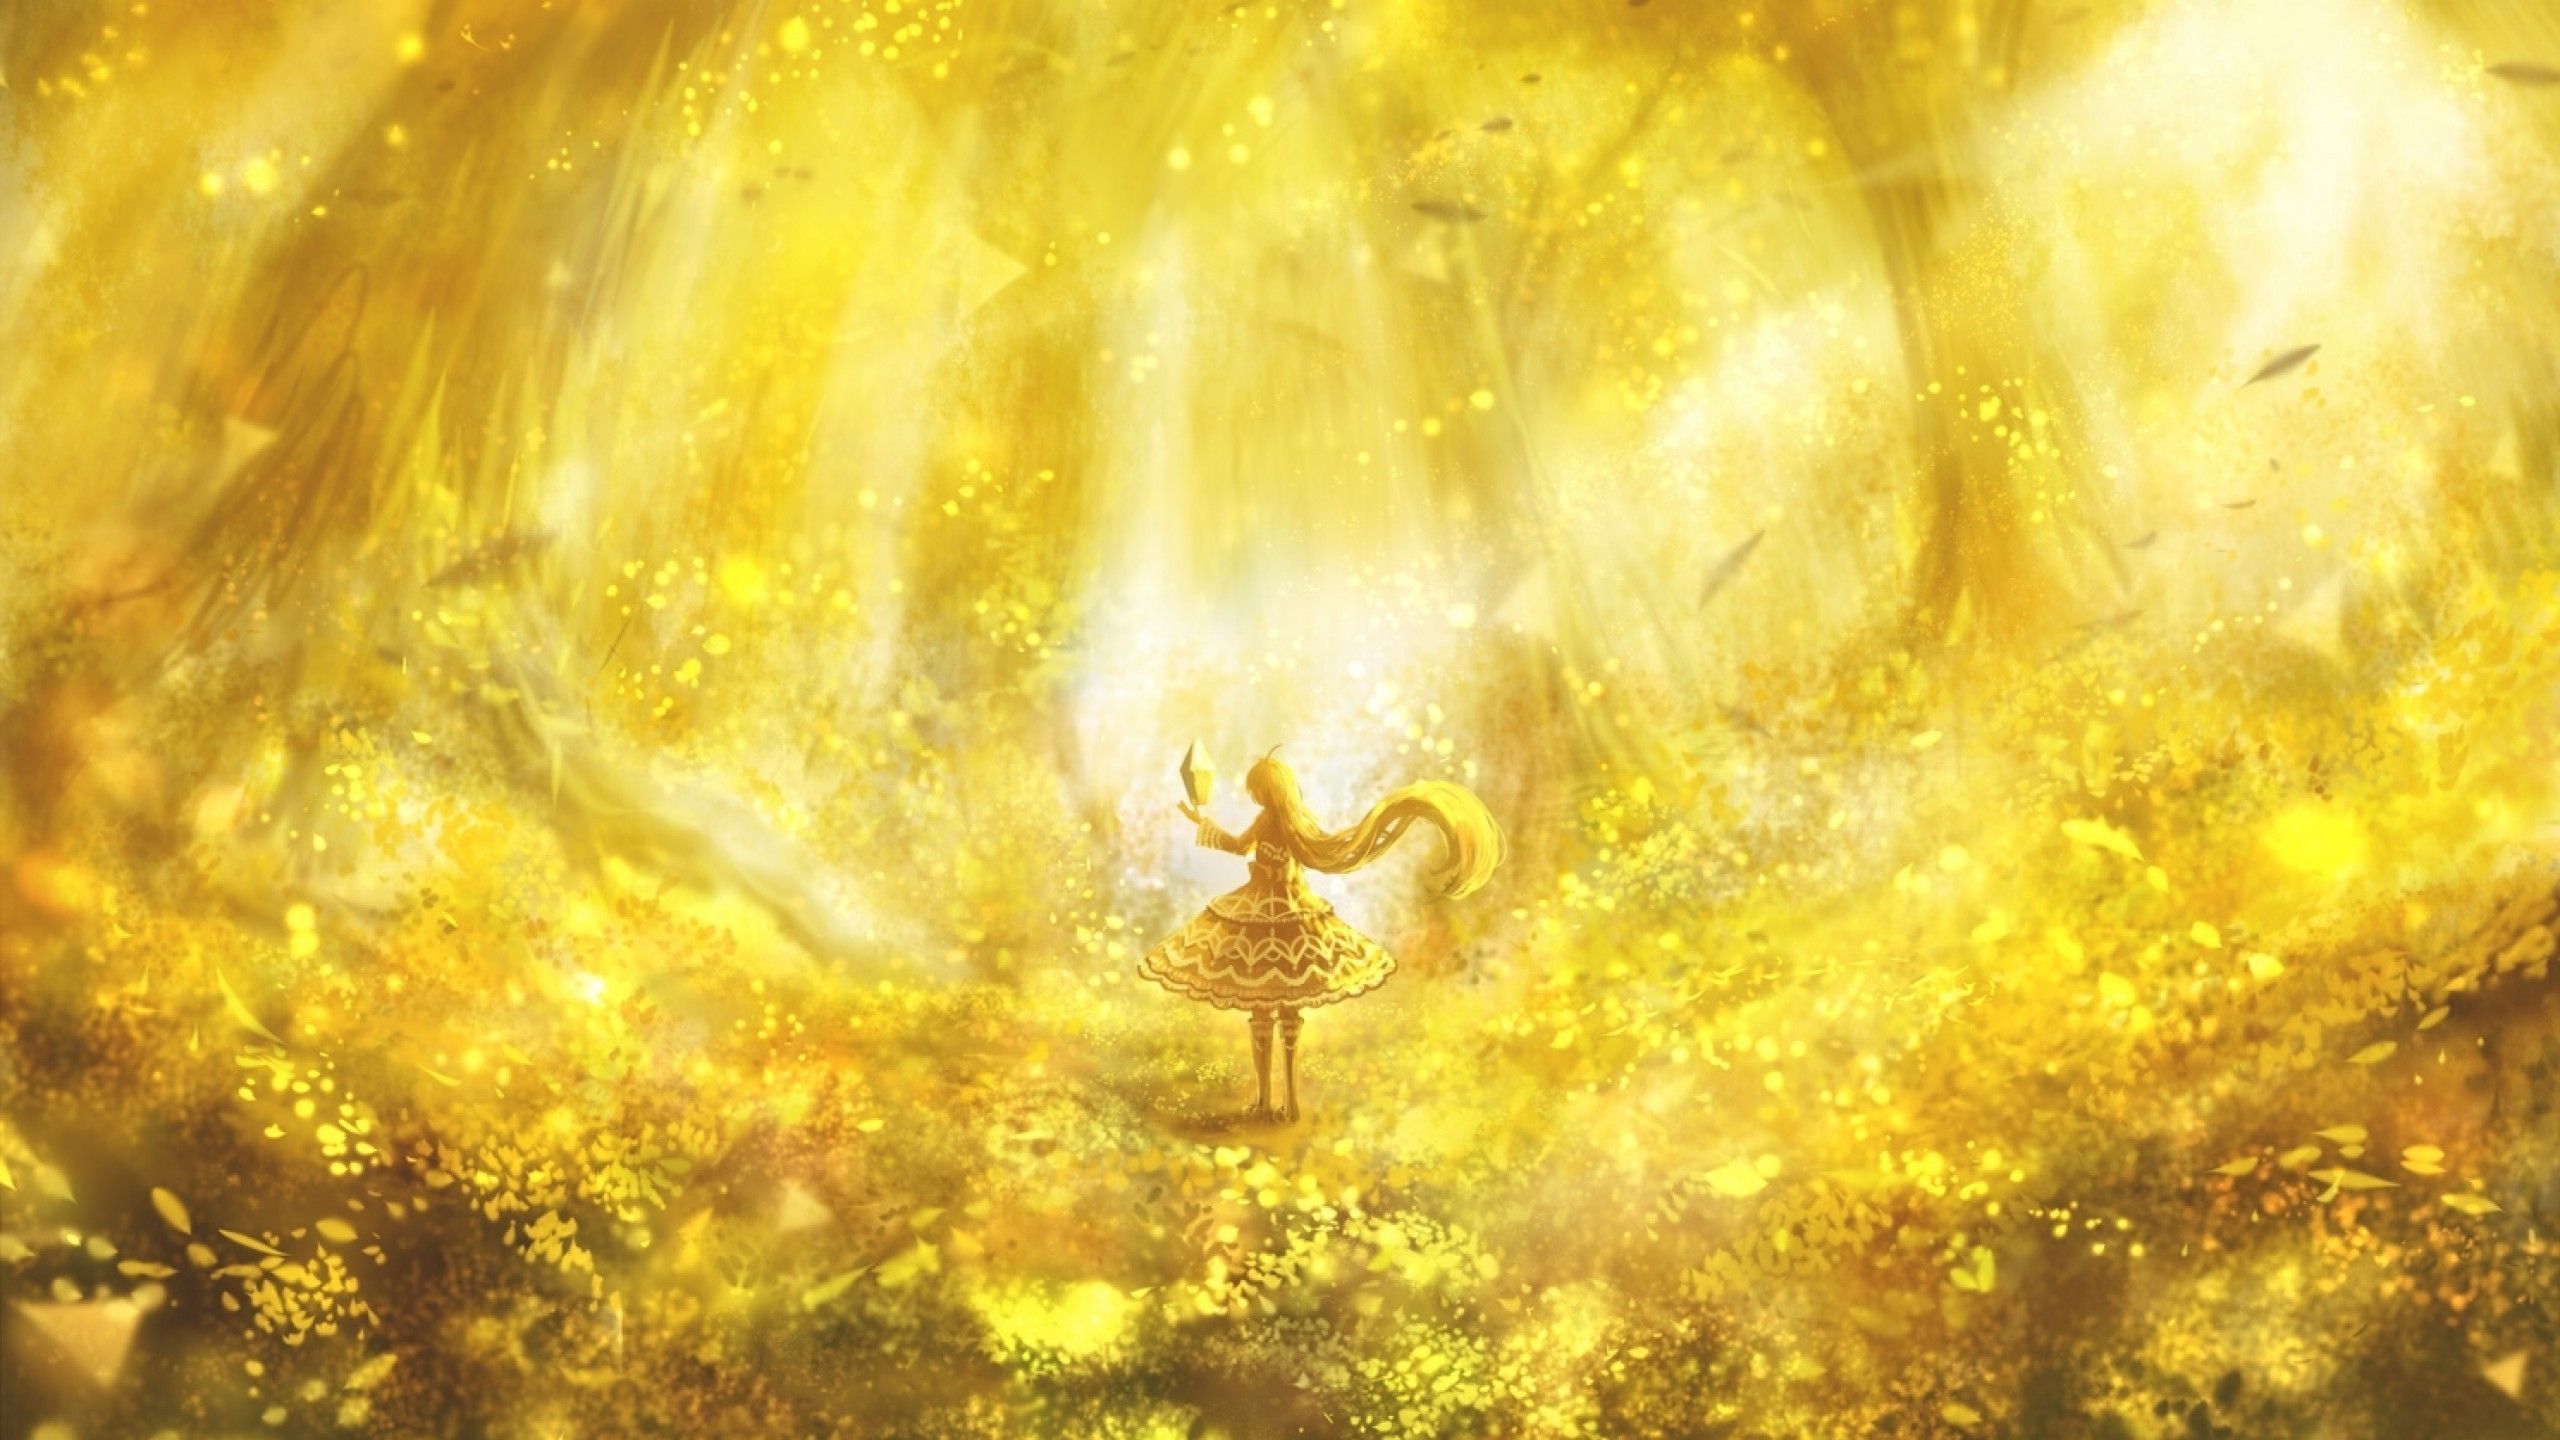 MShare: Anime girl, yellow flowers